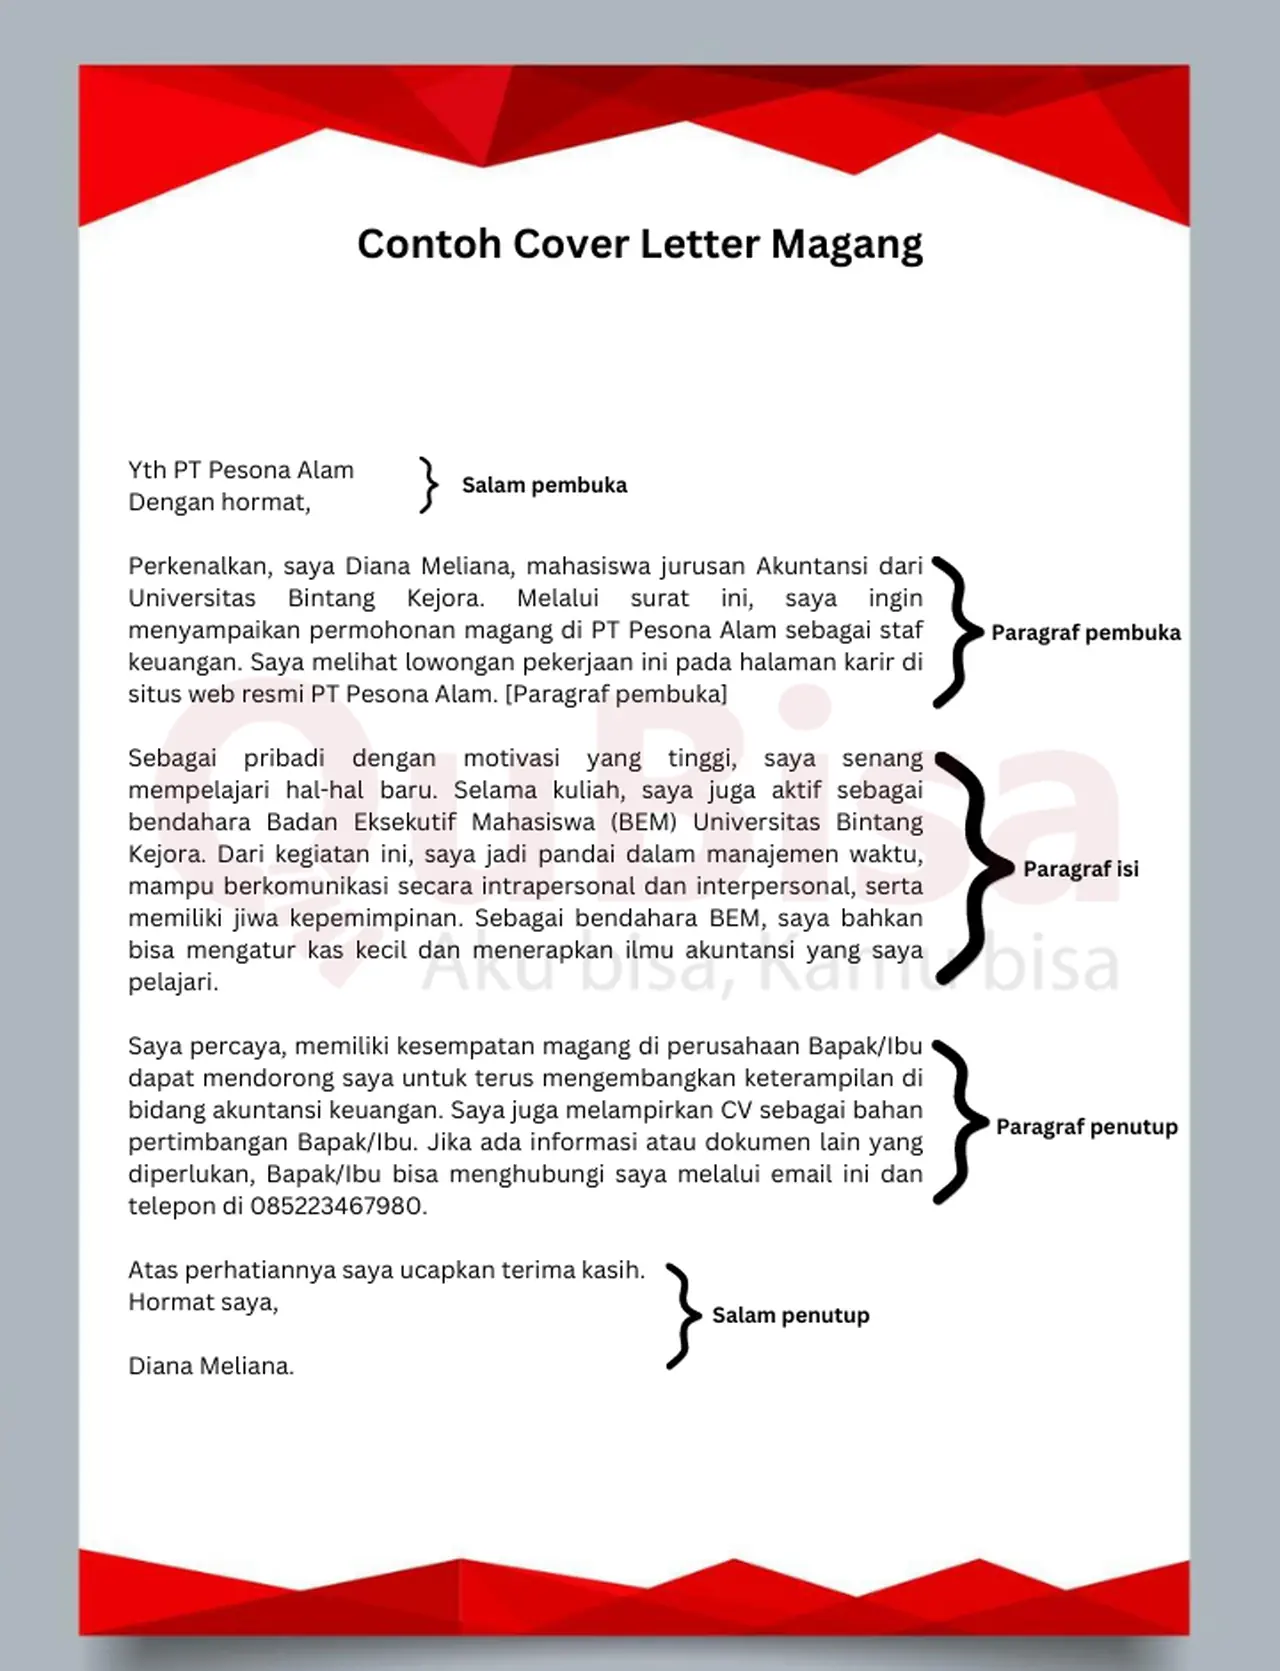 Contoh Cover Letter untuk Magang